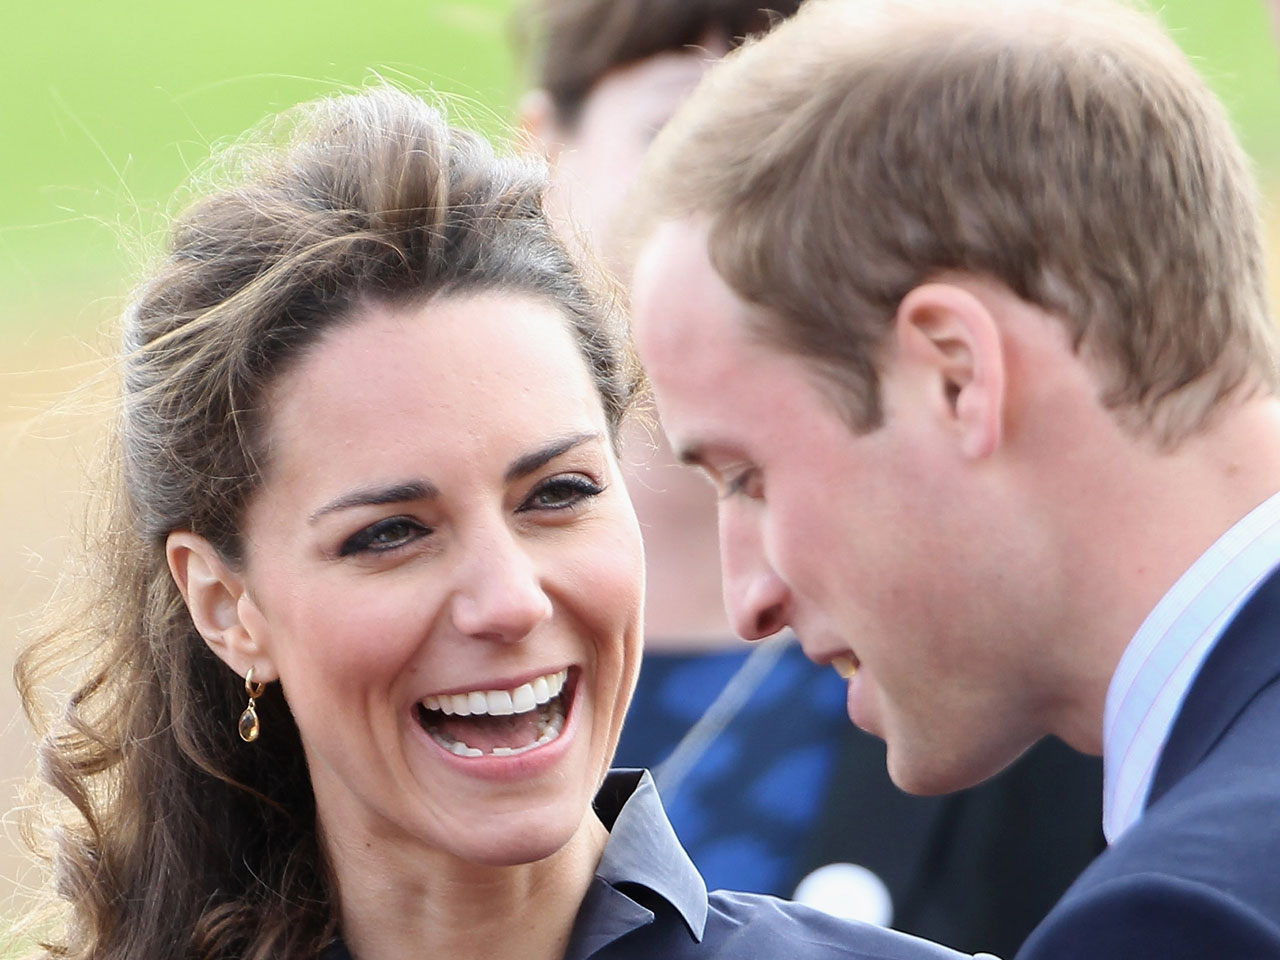 Royal wedding gossip the talk of London - CBS News